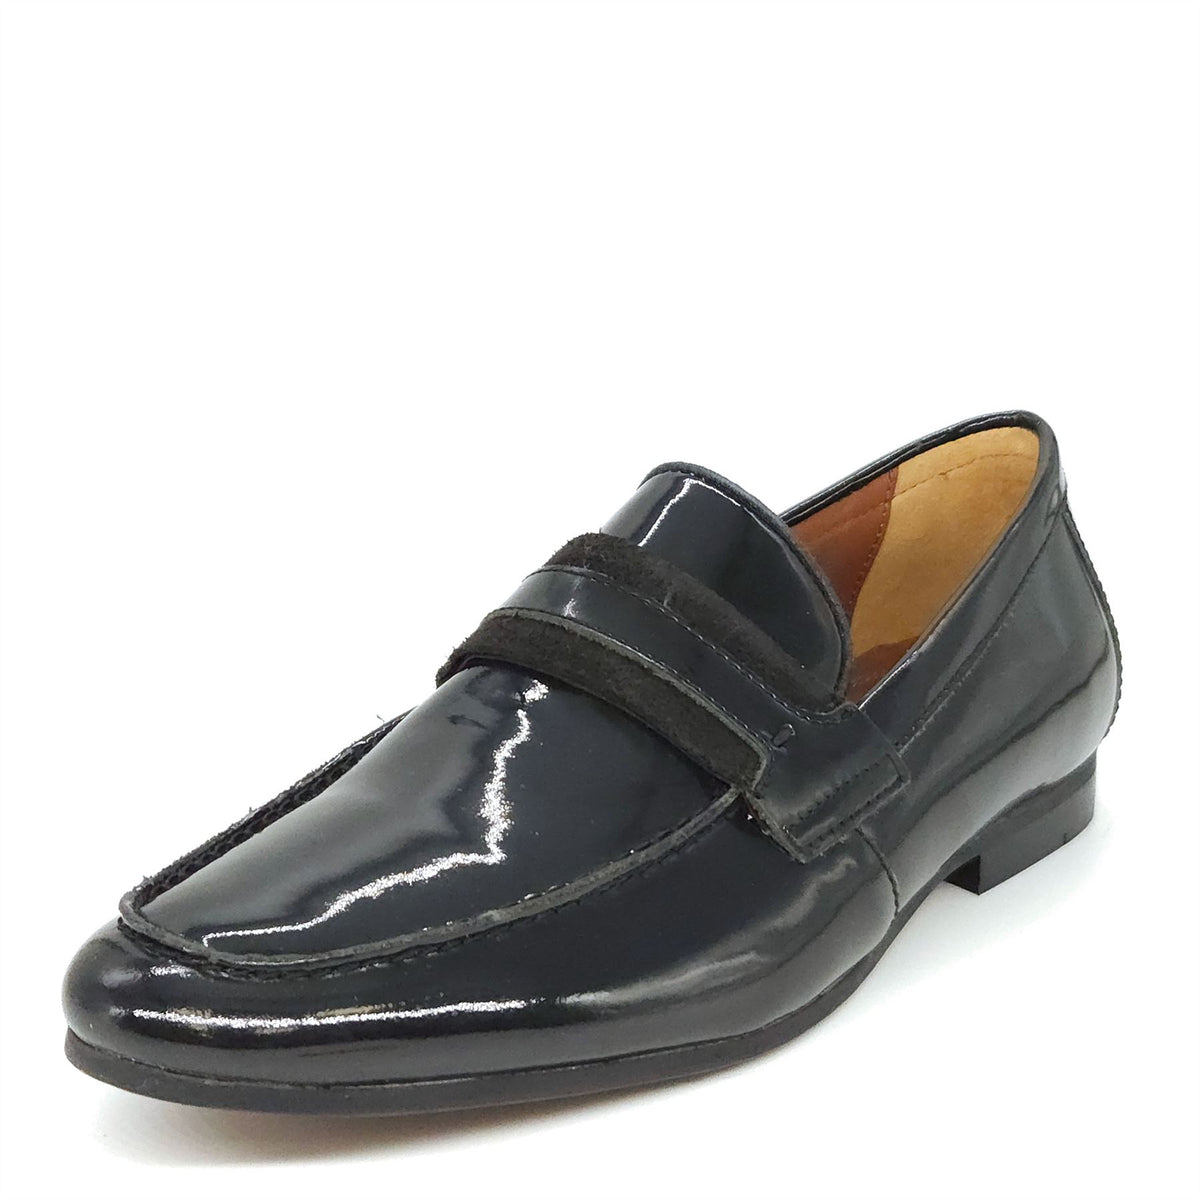 HX London Croydon Patent Leather Loafers